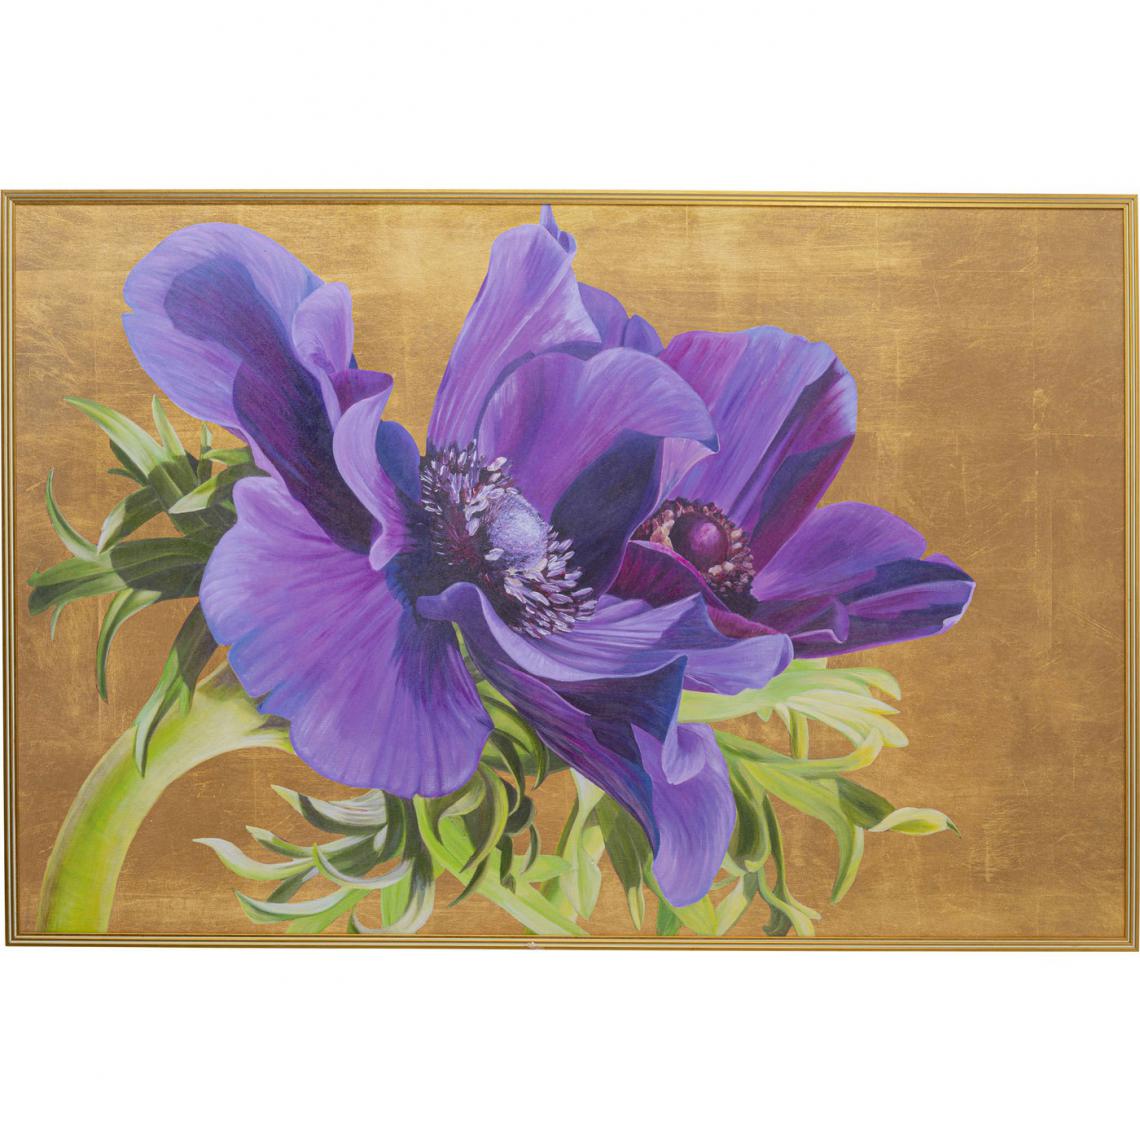 Karedesign - Tableau fleurs violettes 150x100cm Kare Design - Tableaux, peintures